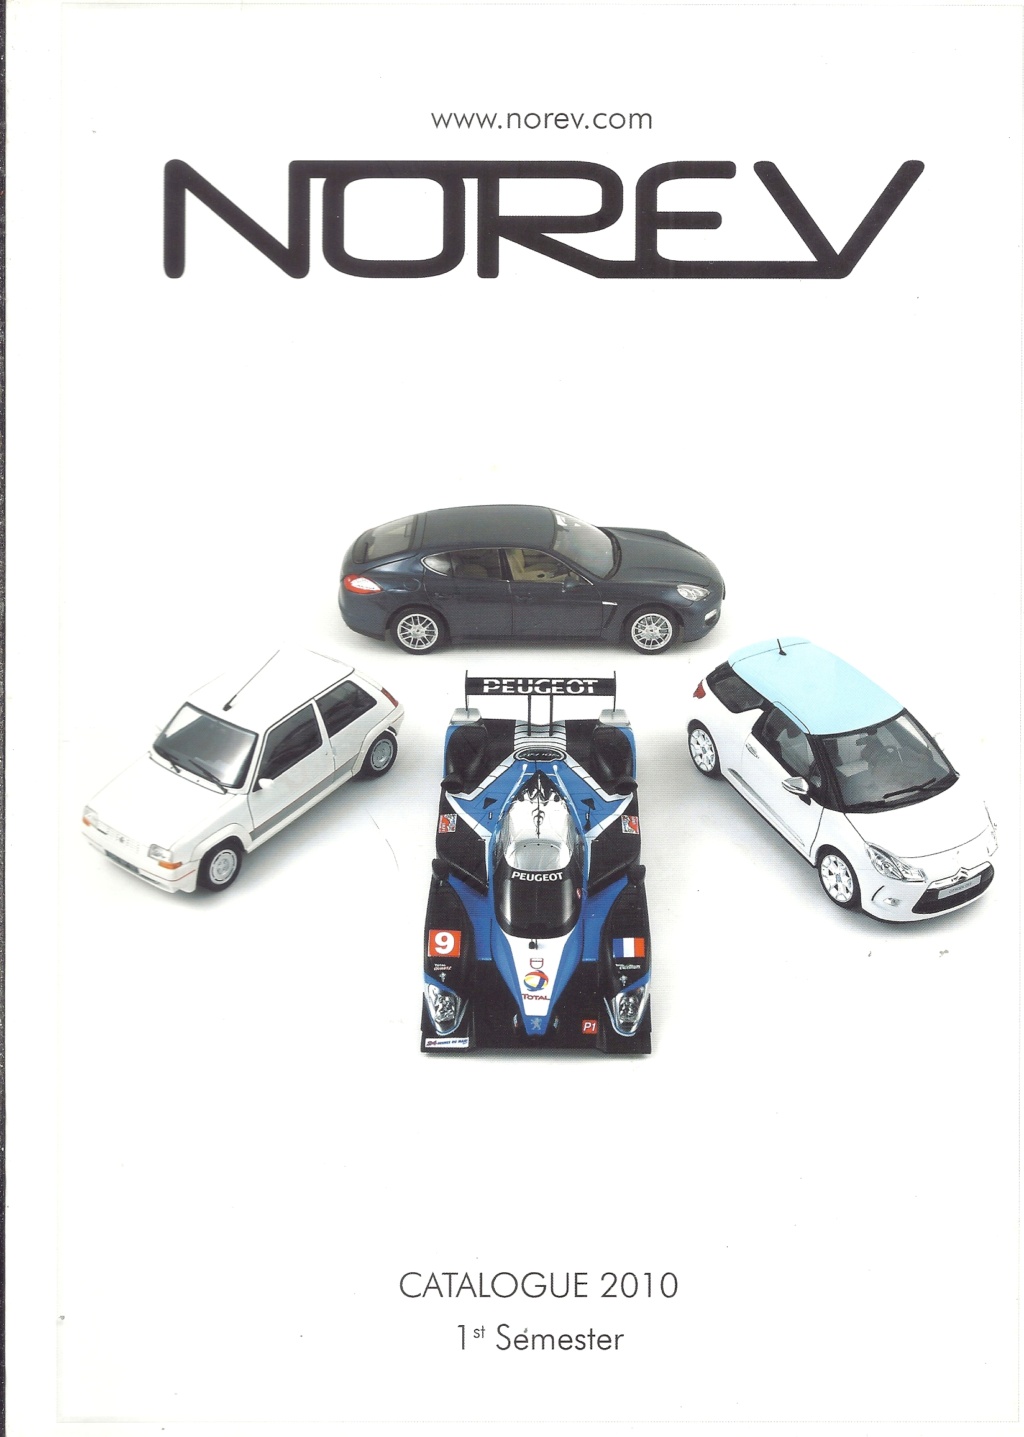 [NOREV 2010] Catalogue 2010 1er semestre  Norev997